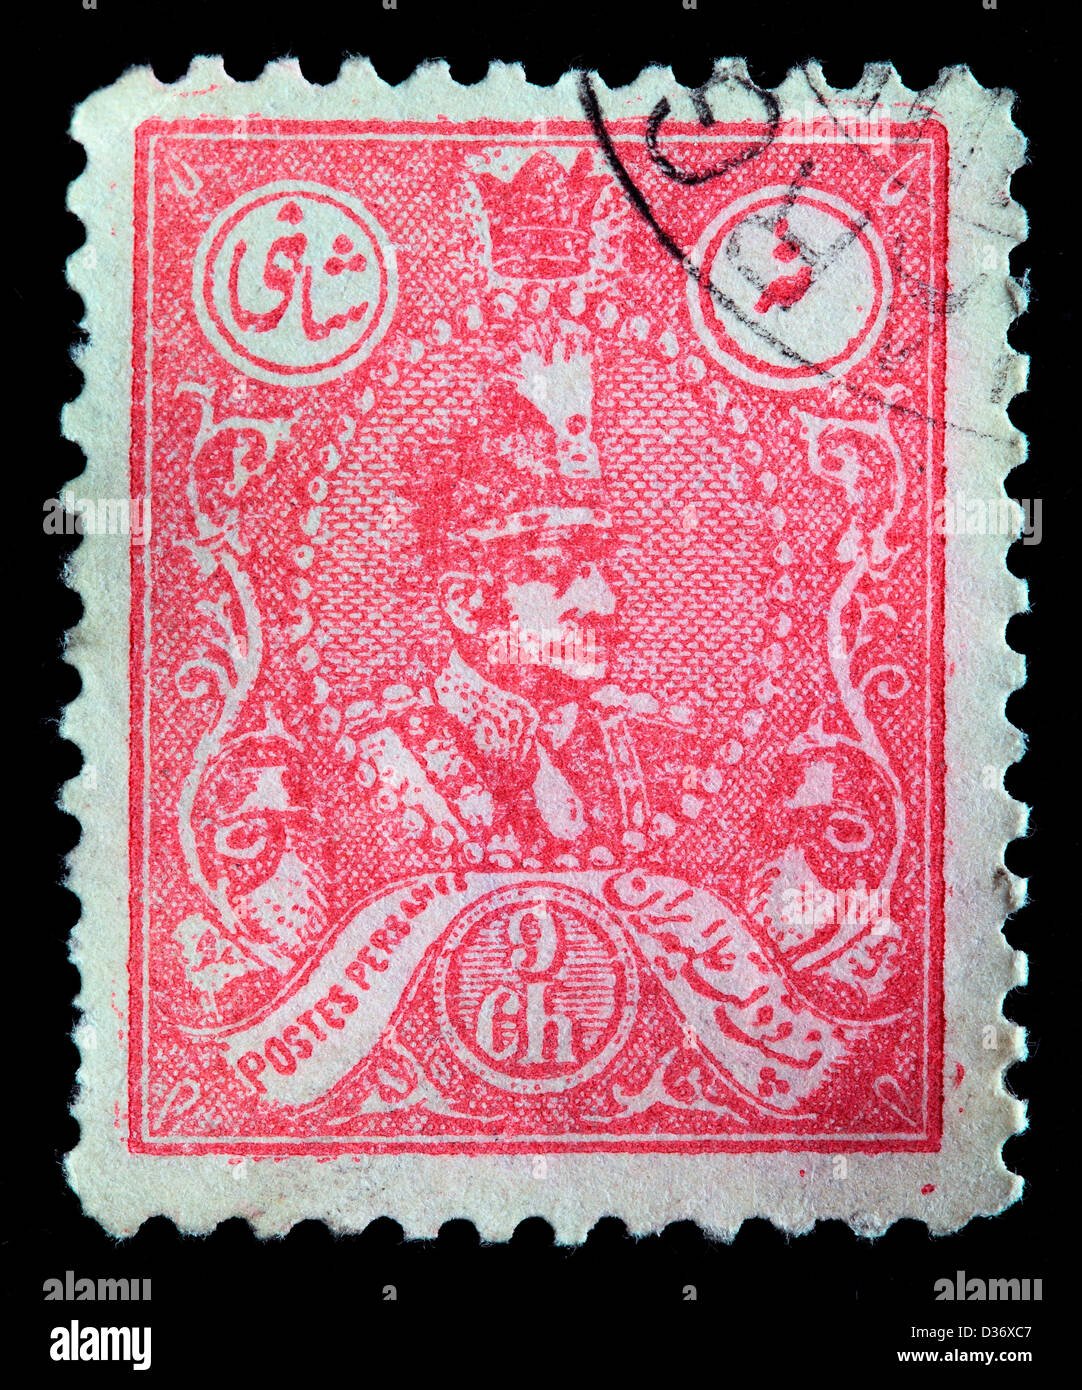 Reza Shah Pahlavi, postage stamp, Iran, 1926 Stock Photo